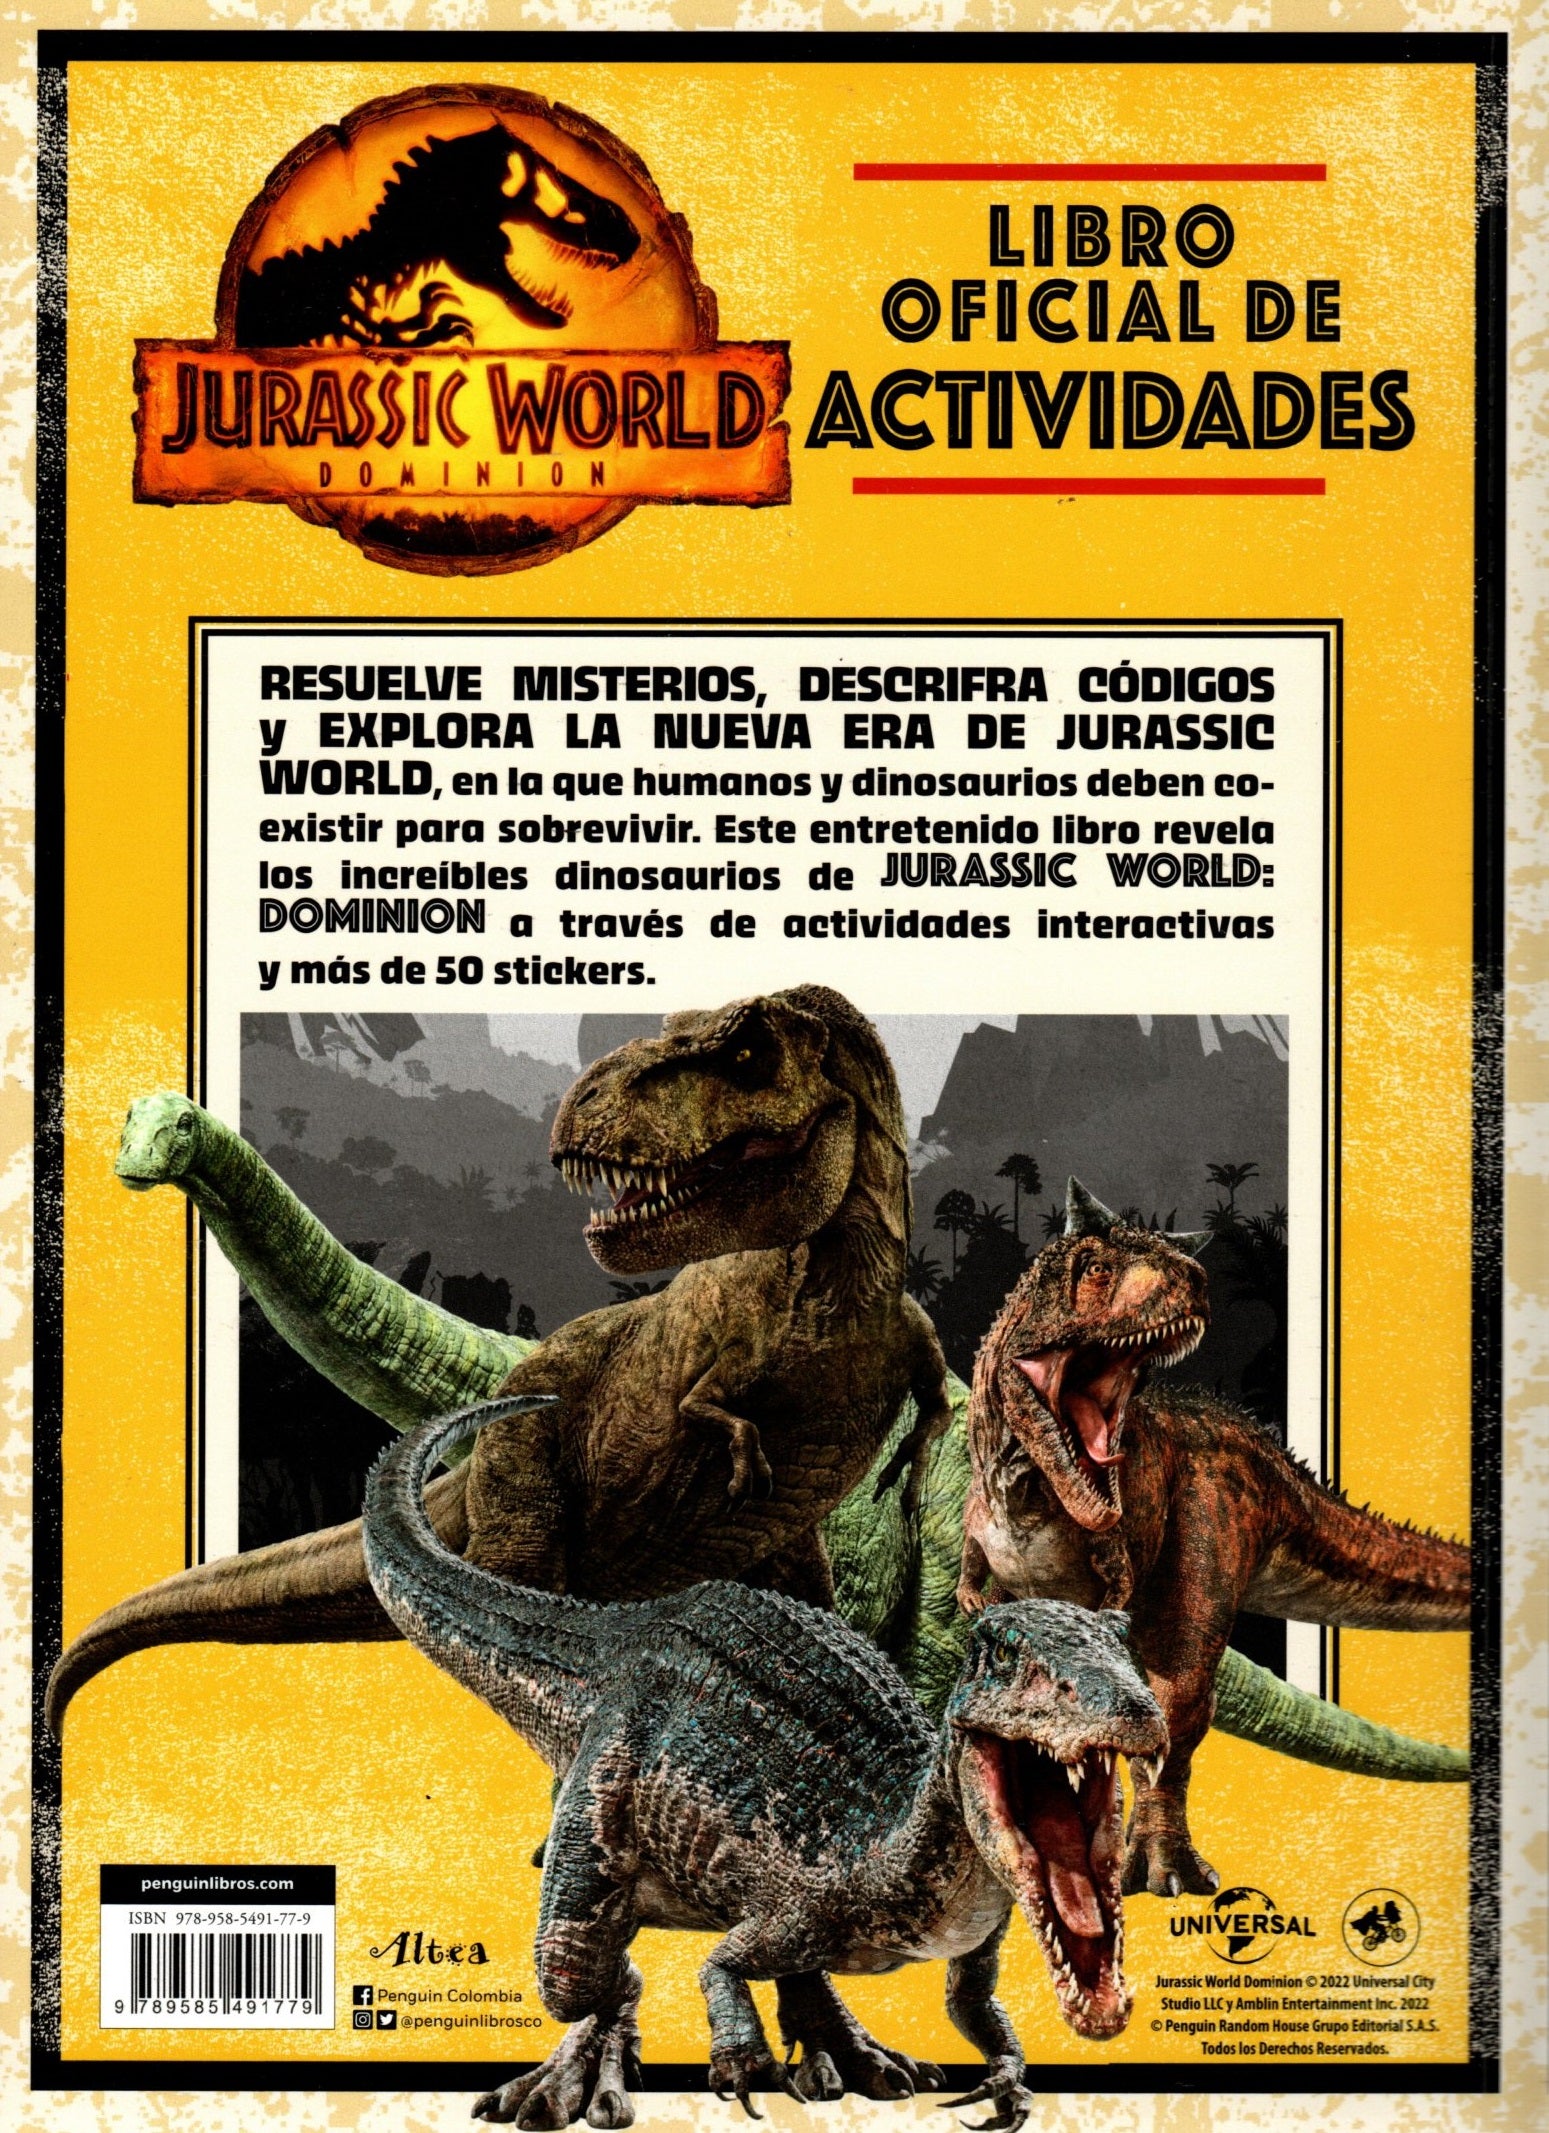 Libro Jurassic World - Códigos, Laberintos, Retos